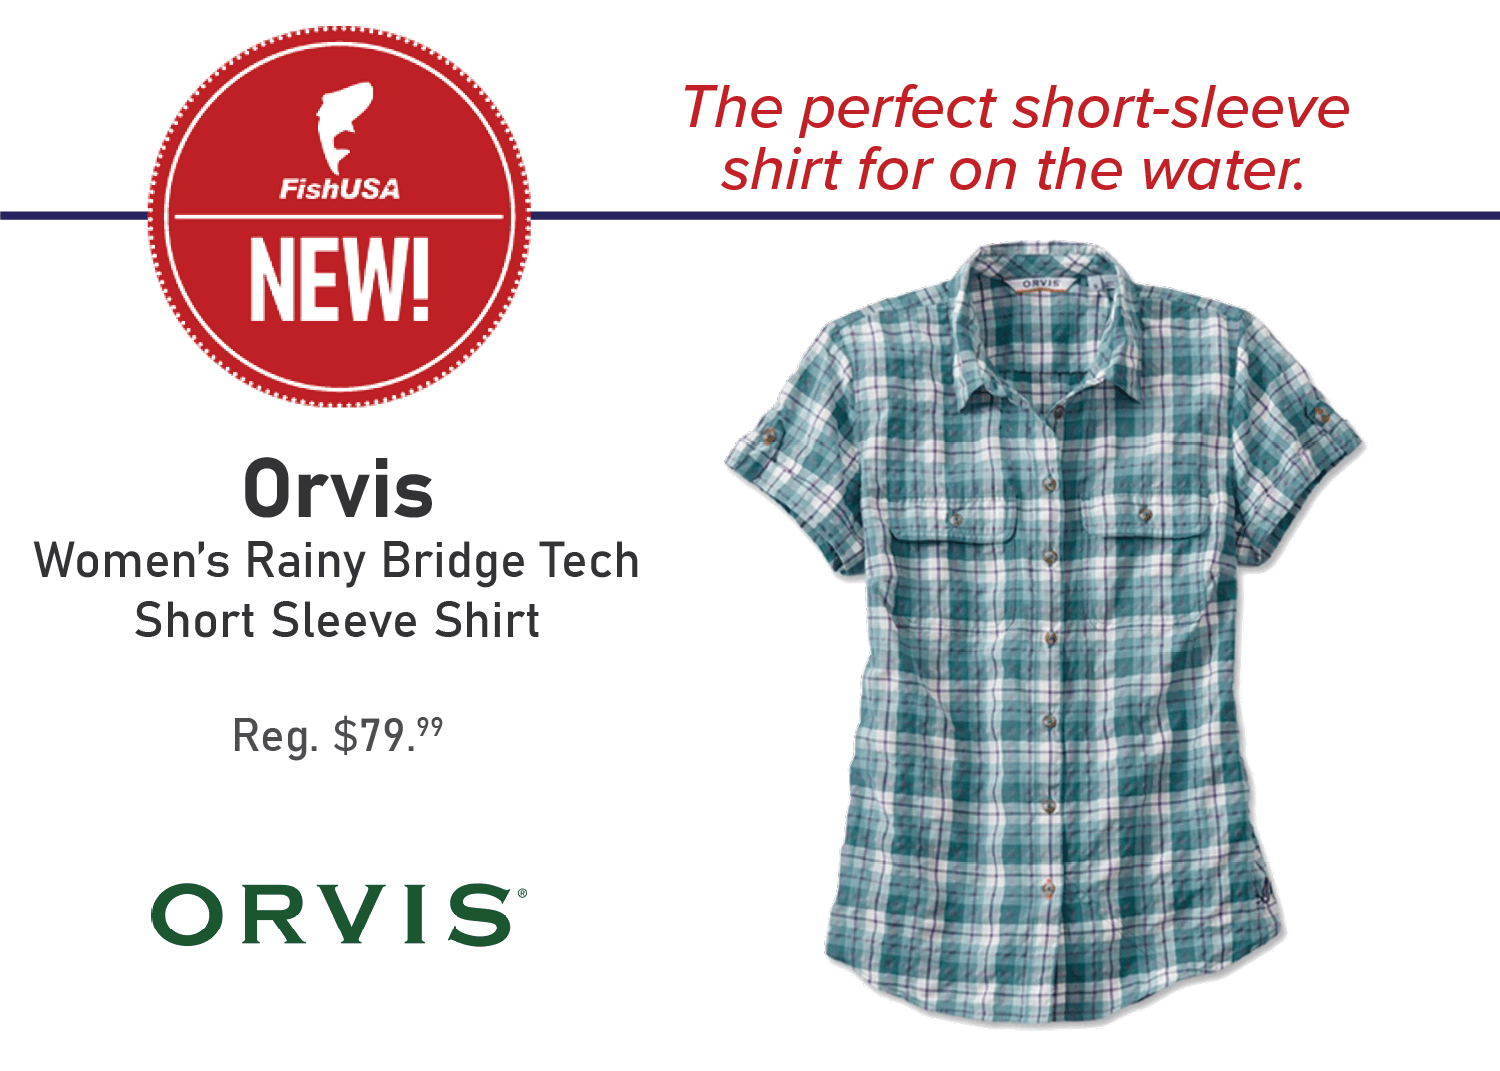 Orvis Women's Rainy Bridge Tech Short Sleeve Shirt